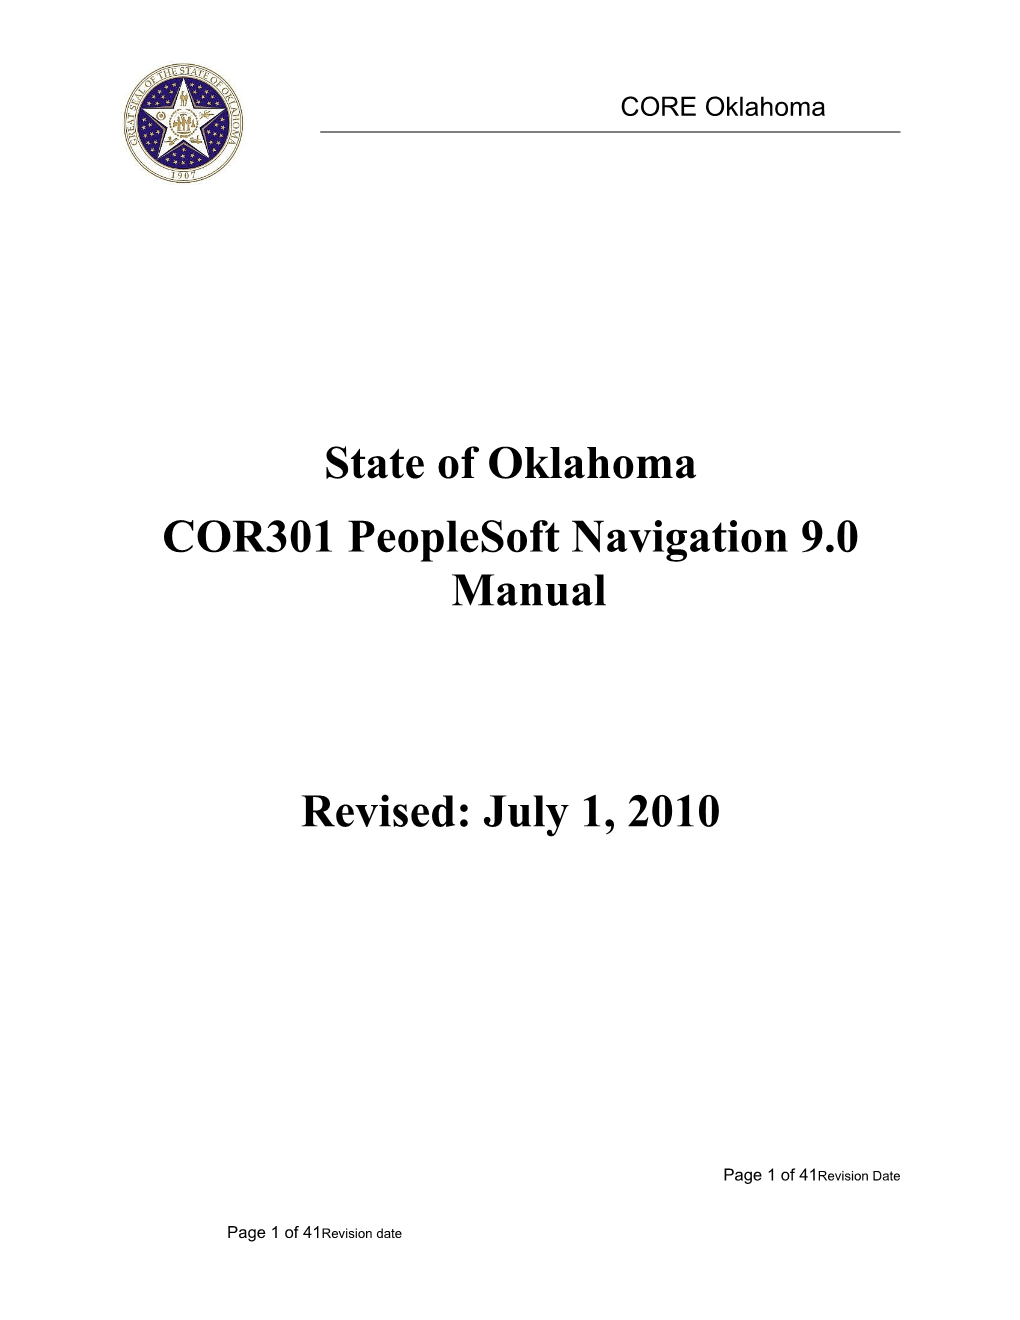 COR 301 Navigation Training Manual